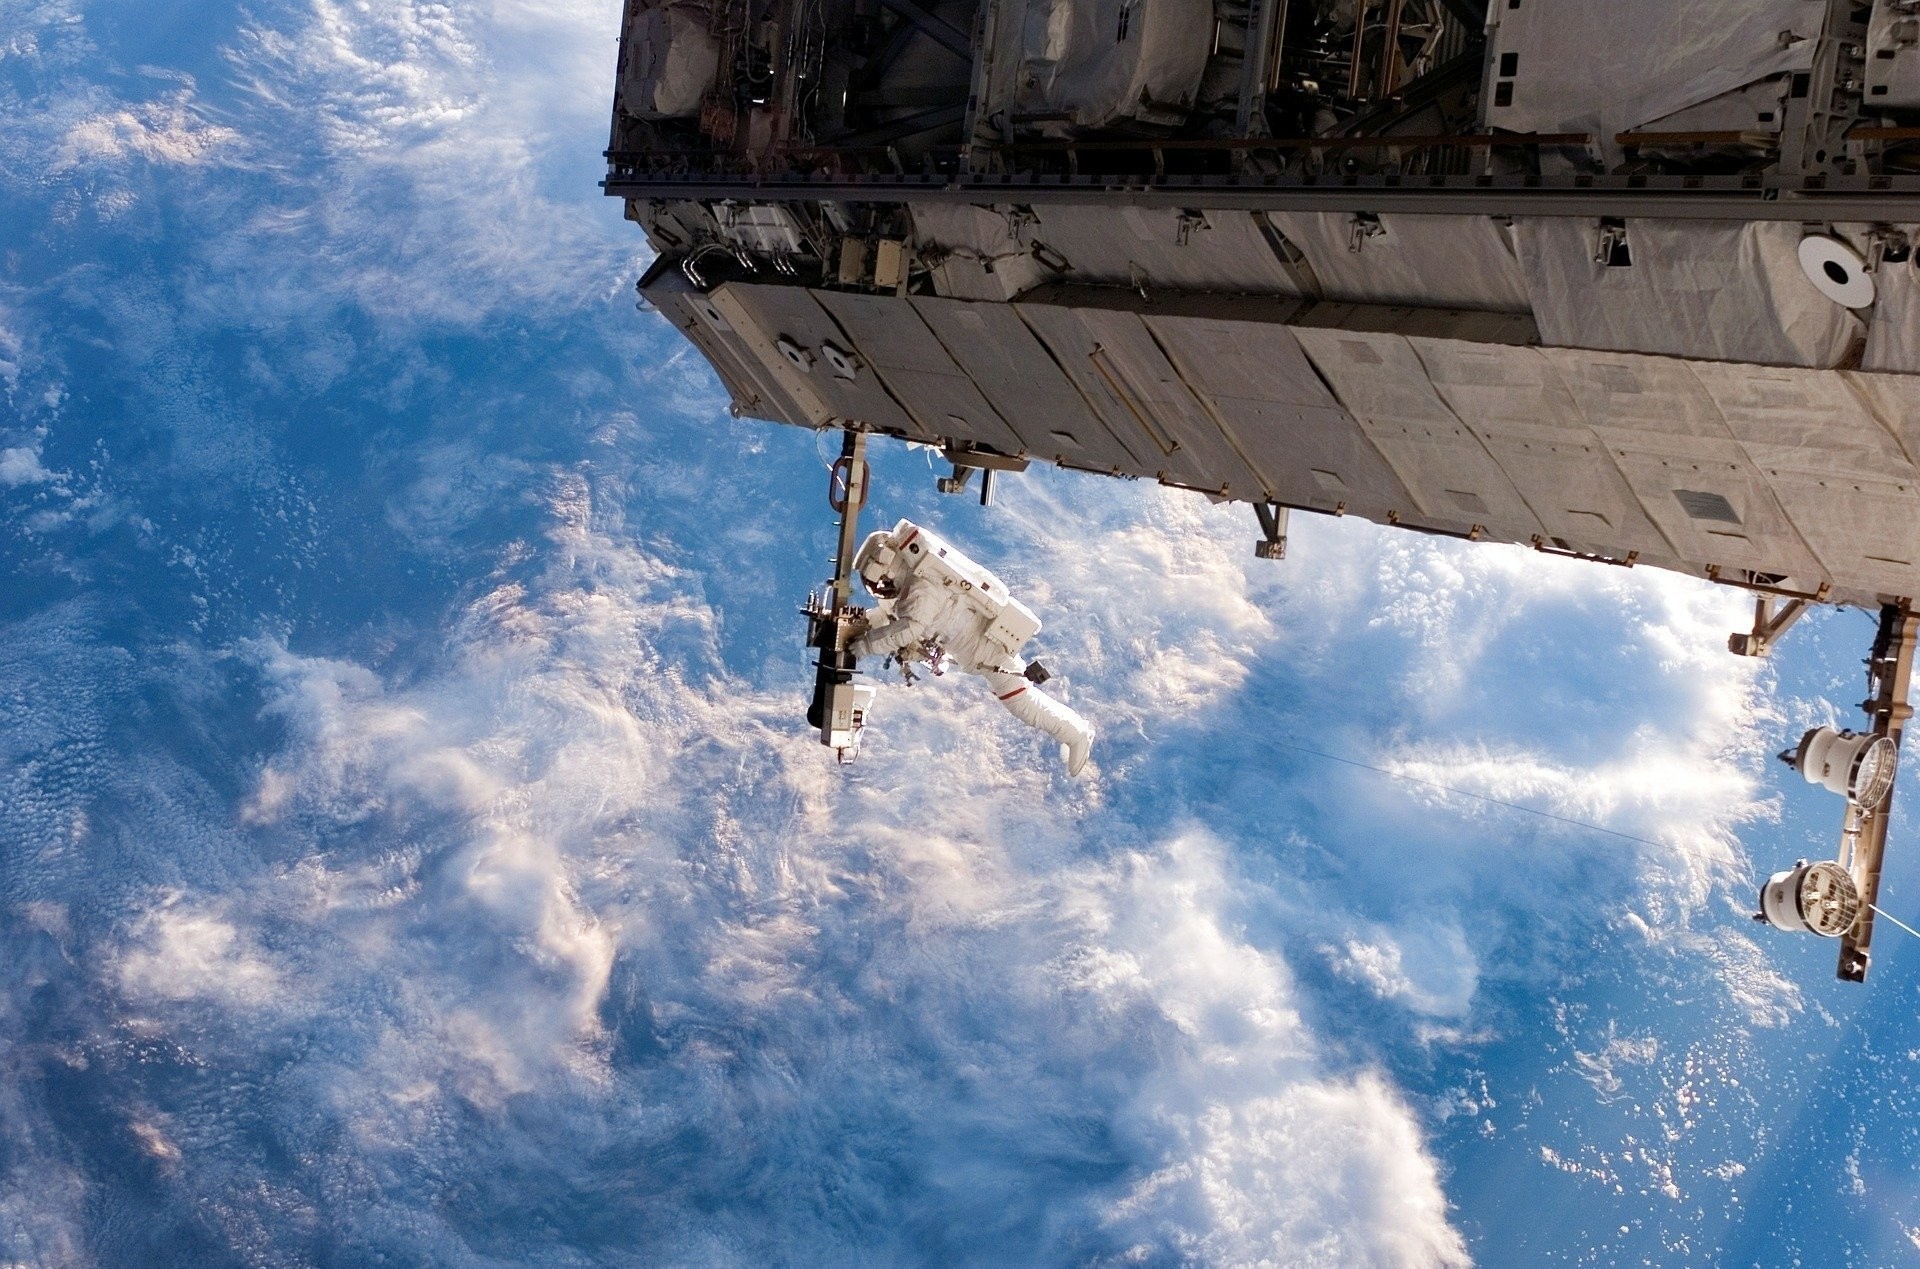 Astronaut suit eva ms tools suit flight the international space station maintenance eva helmet visor reflection